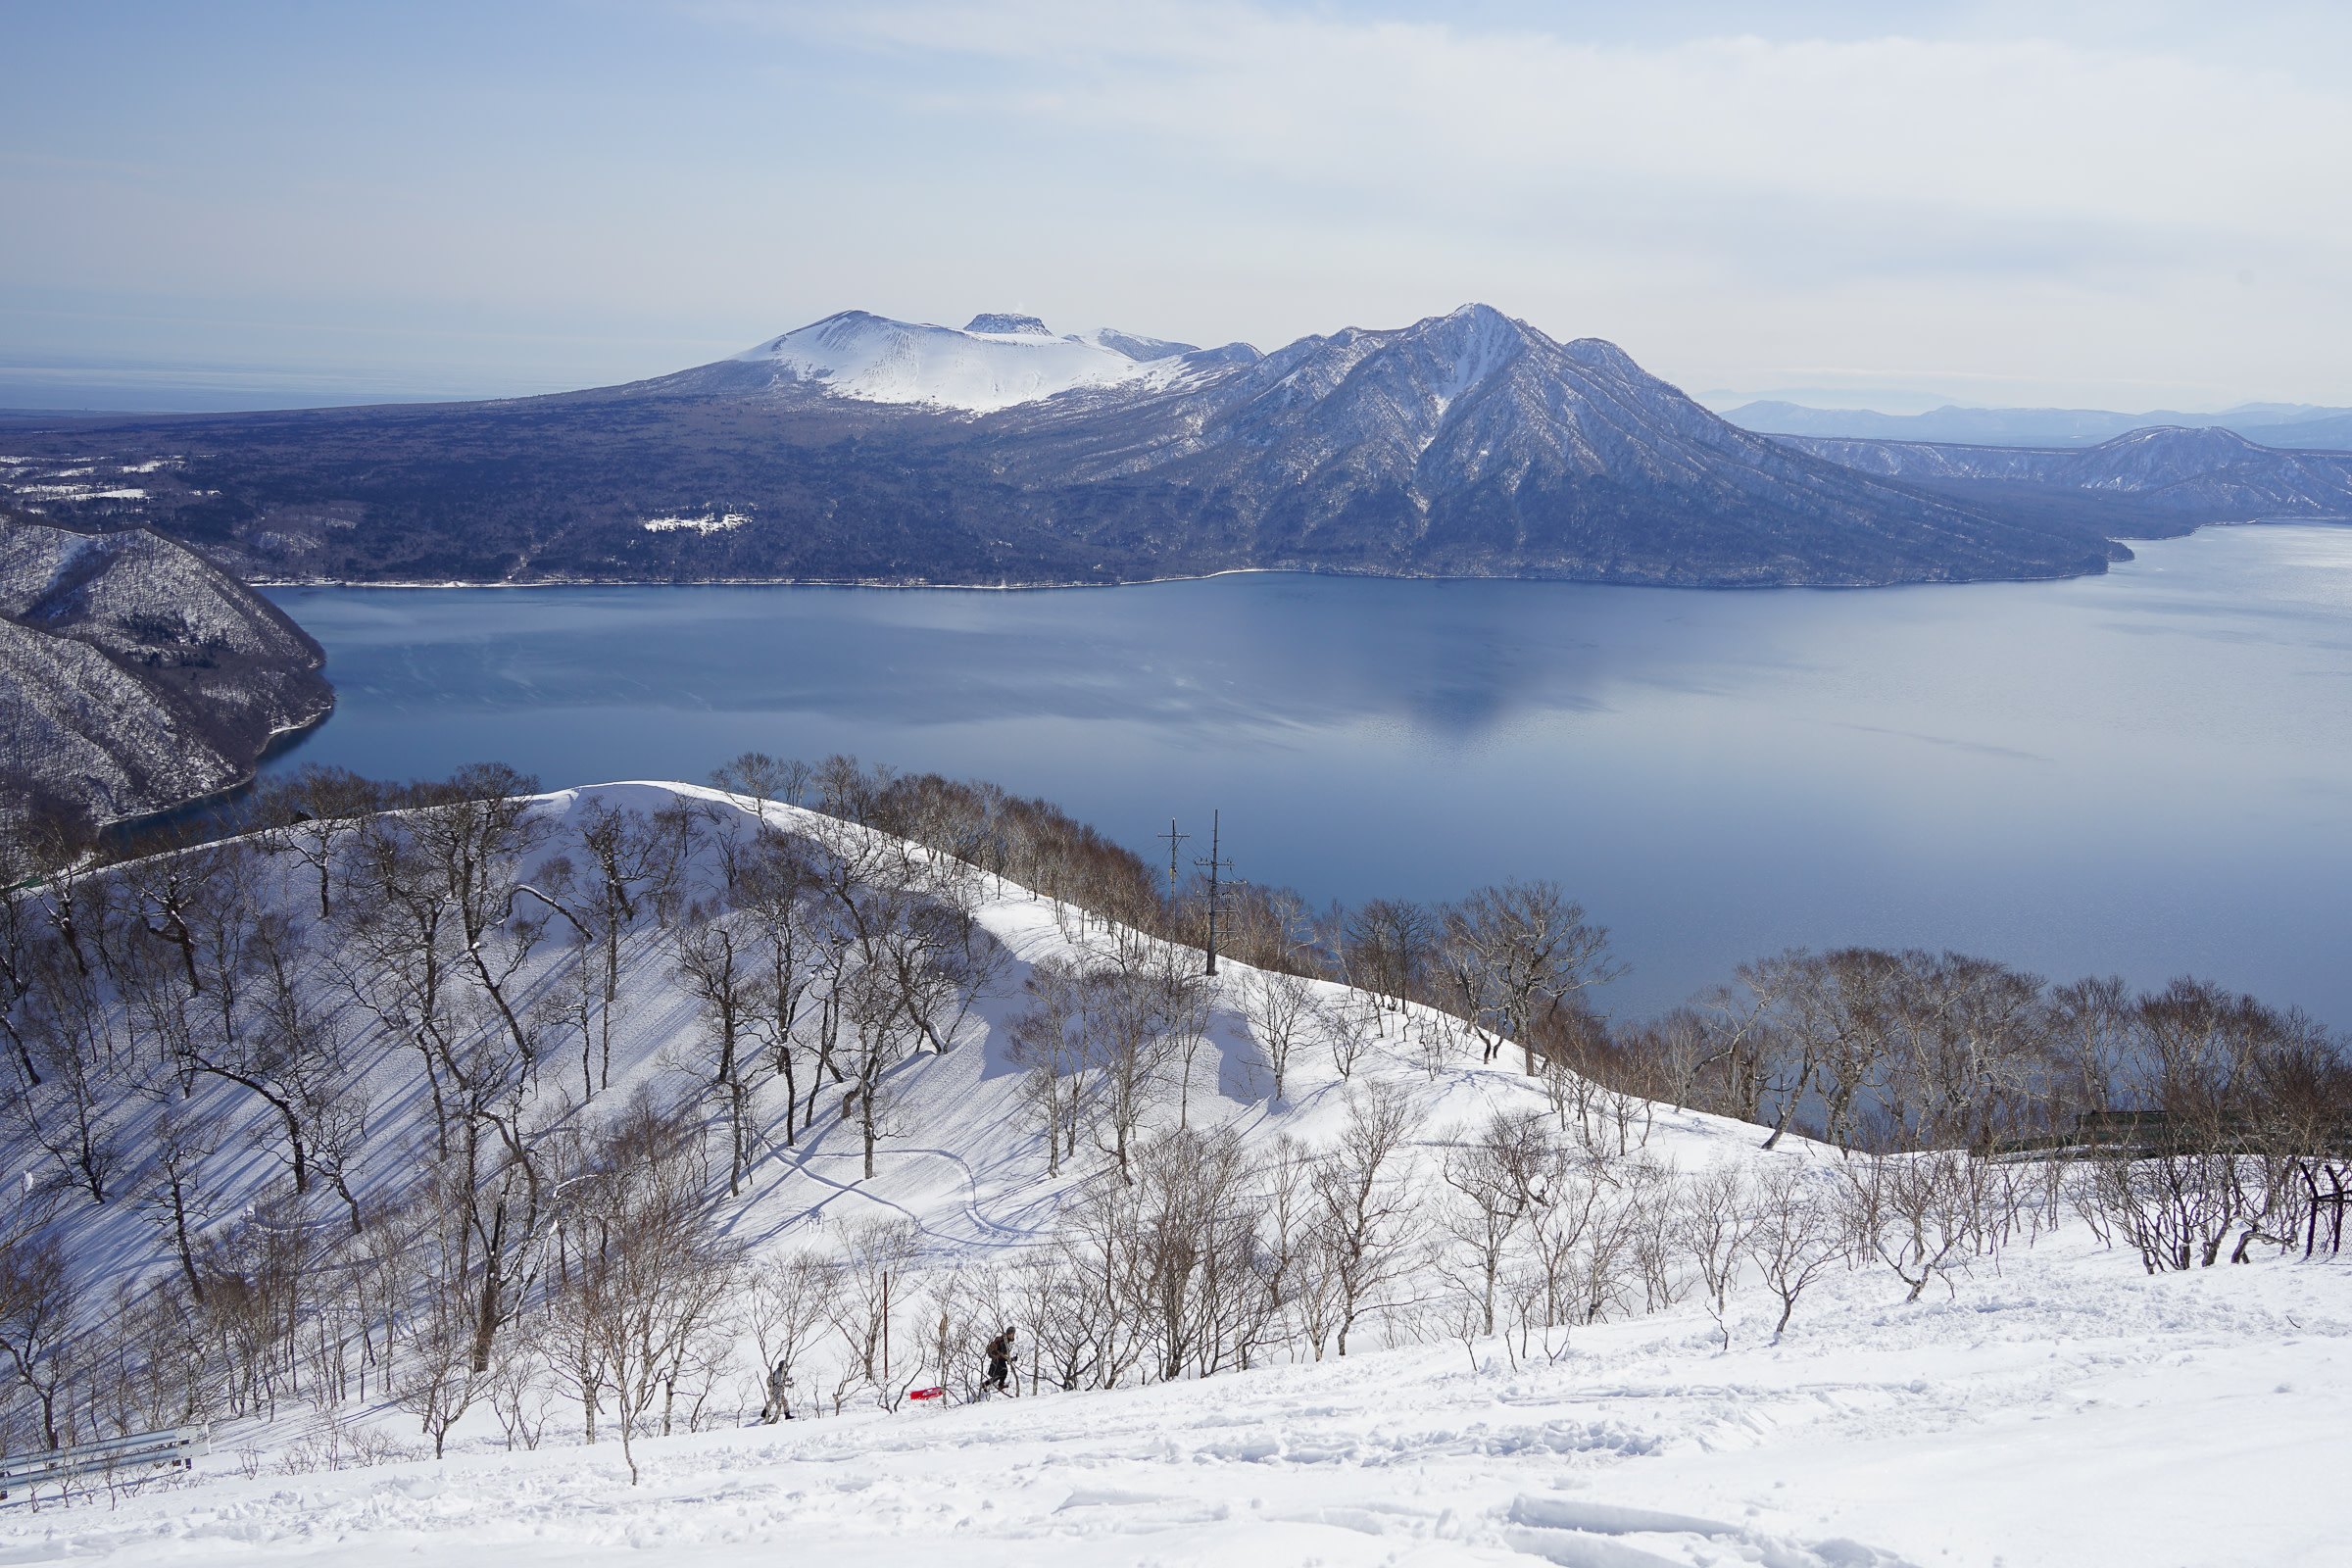 A view of Mt. Tarumae, Mt. Fuppushi & Lake Shikotsu taken from the summit of Mt. Monbetsu in winter.